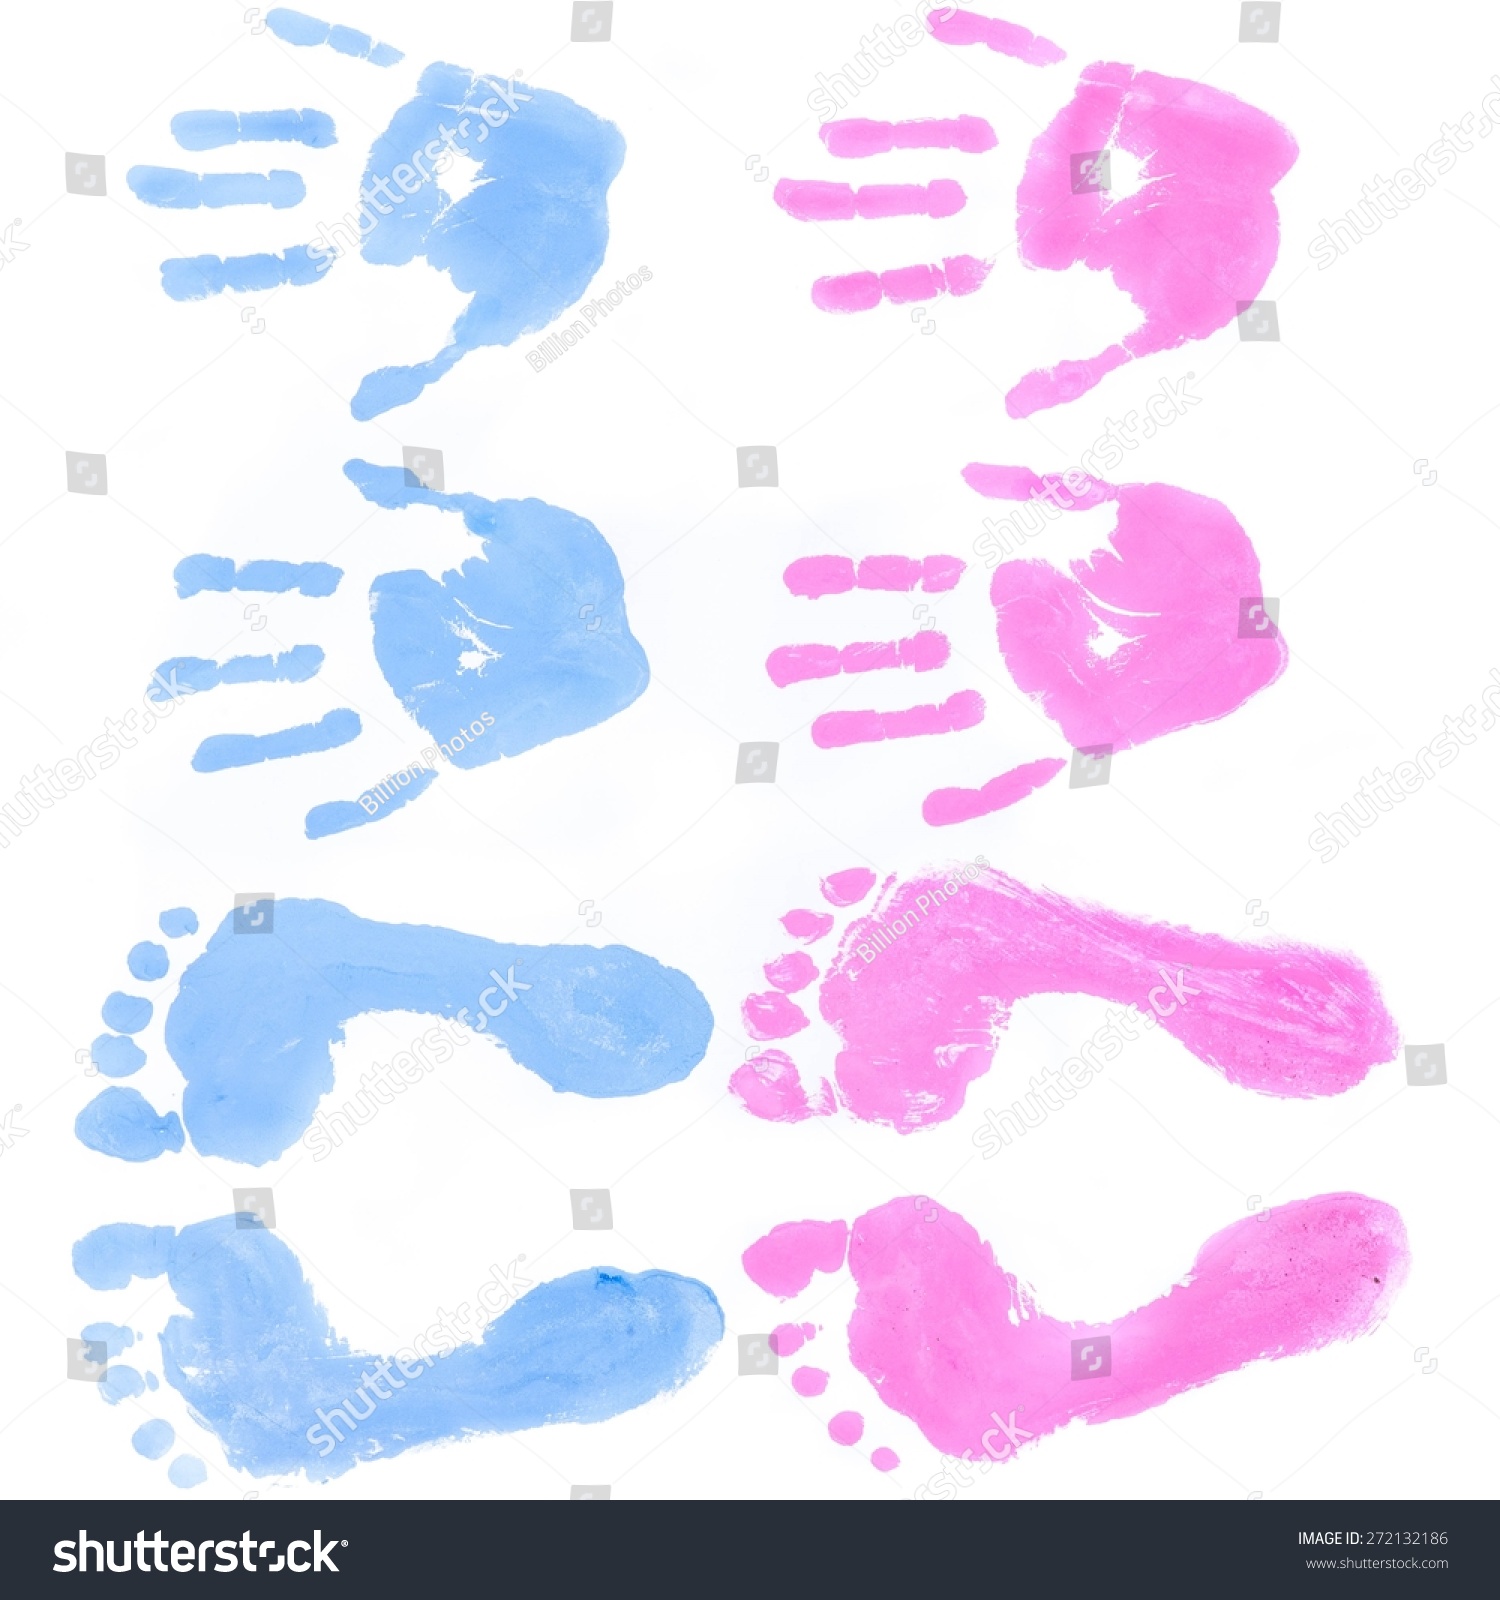 Baby, Human Hand, Footprint. Stock Photo 272132186 : Shutterstock